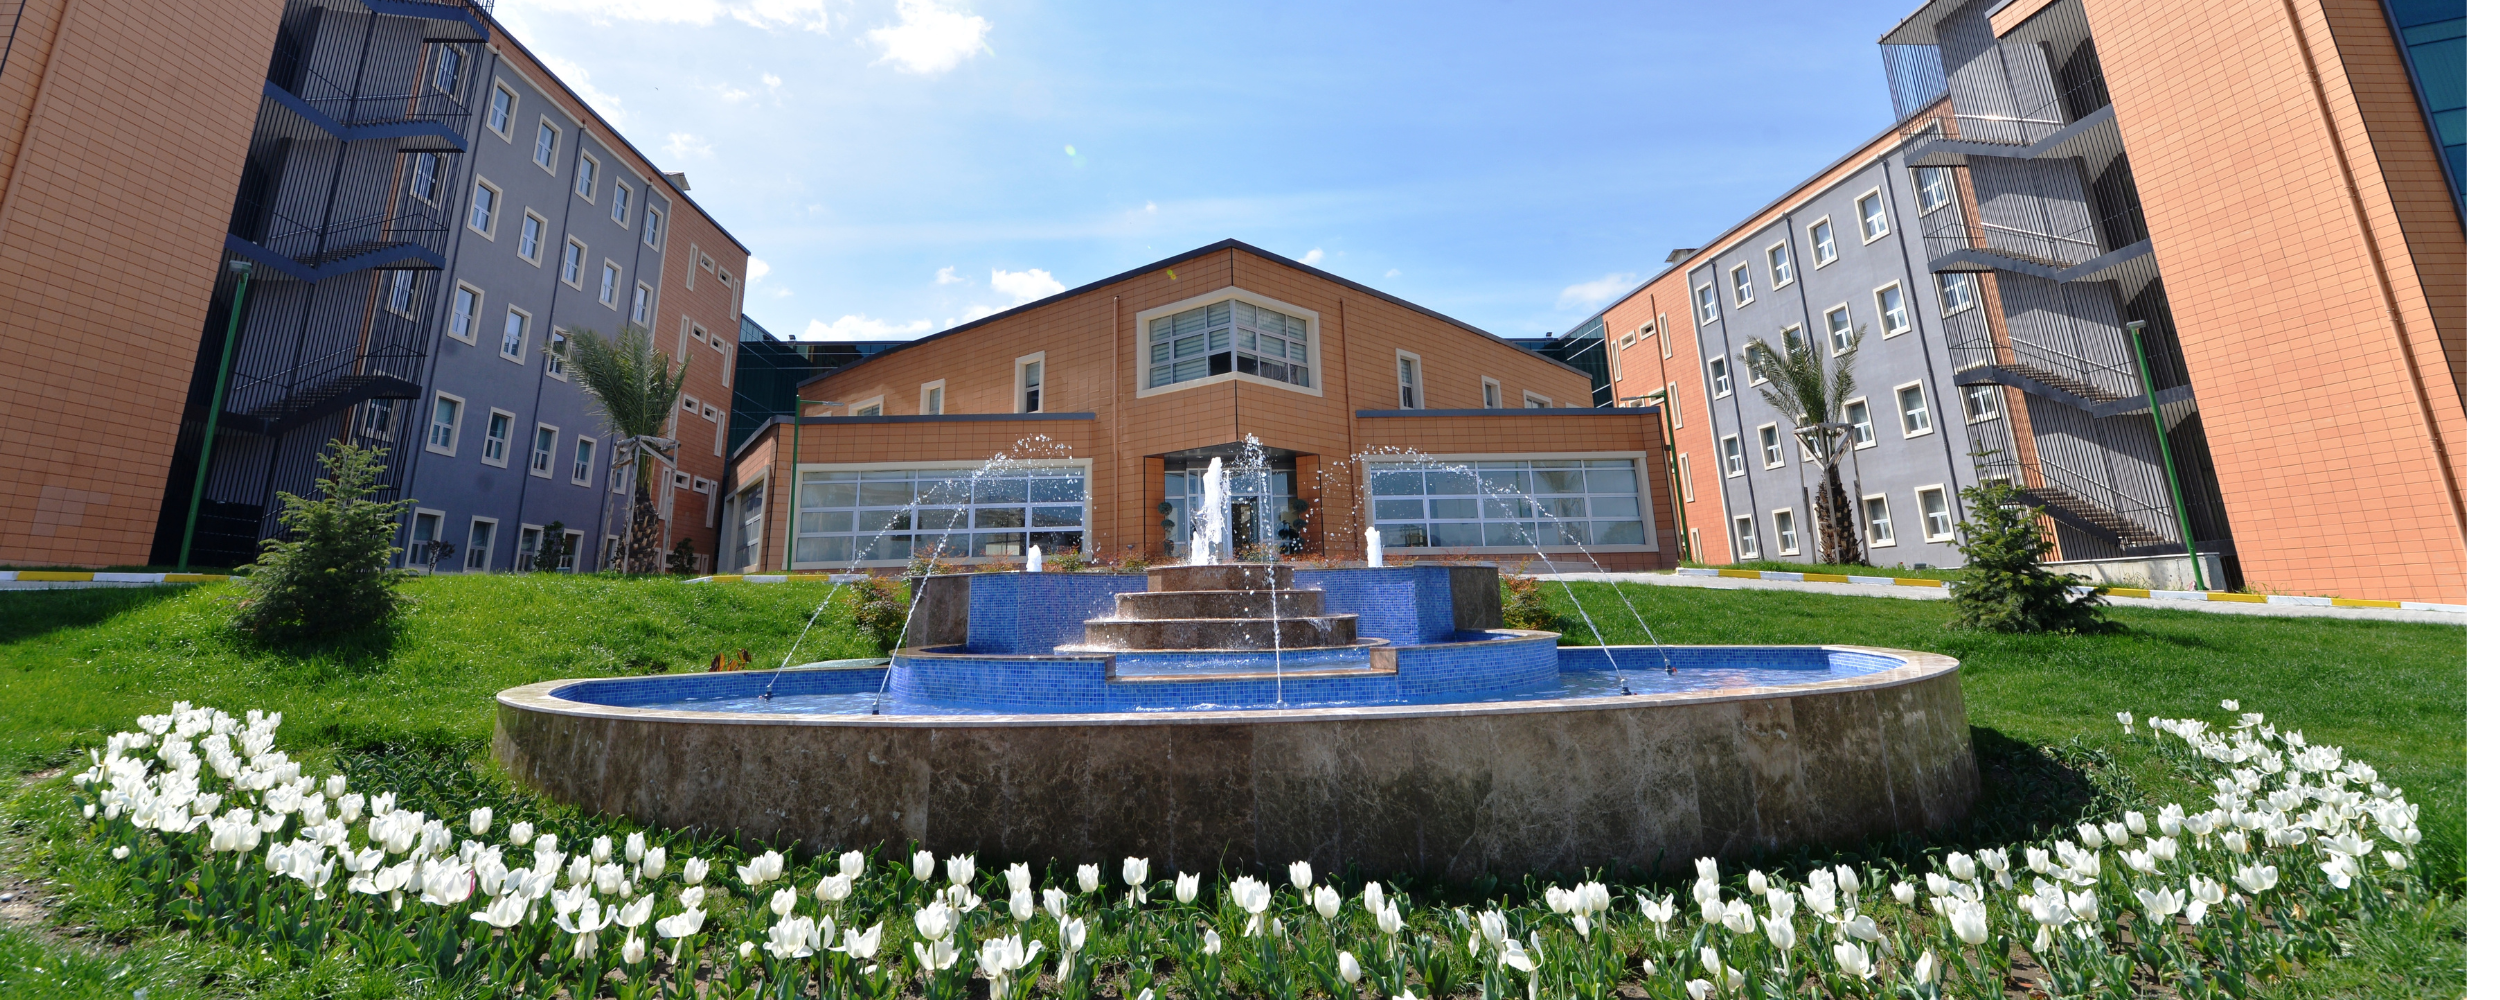 osmaniy universitesi find and study 9 - Osmaniye Korkut Ata University